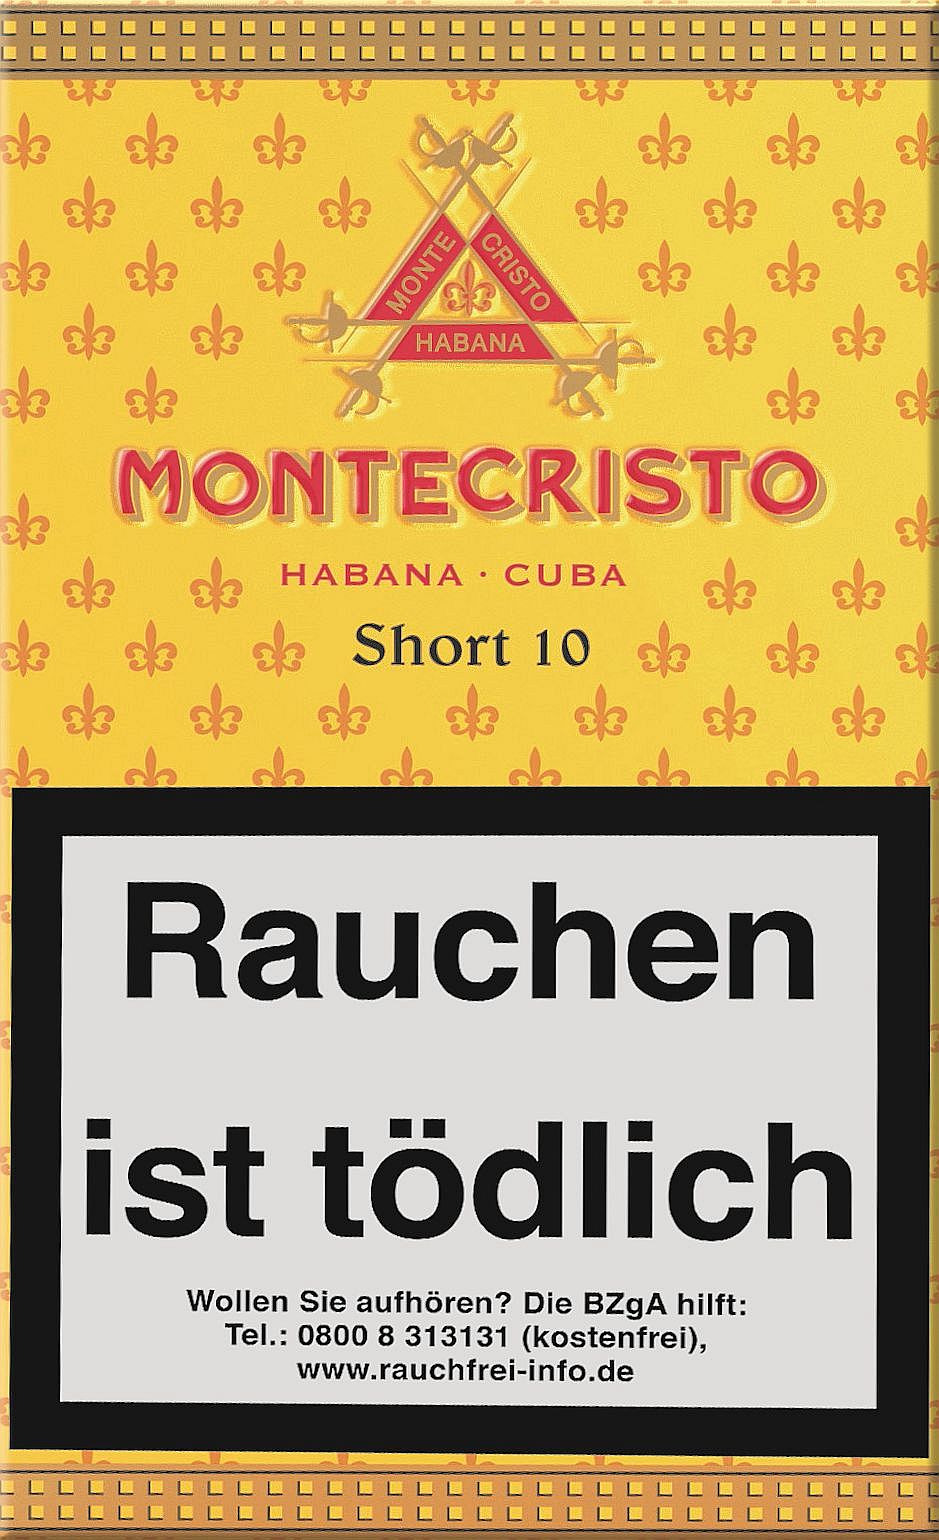 Montecristo Short